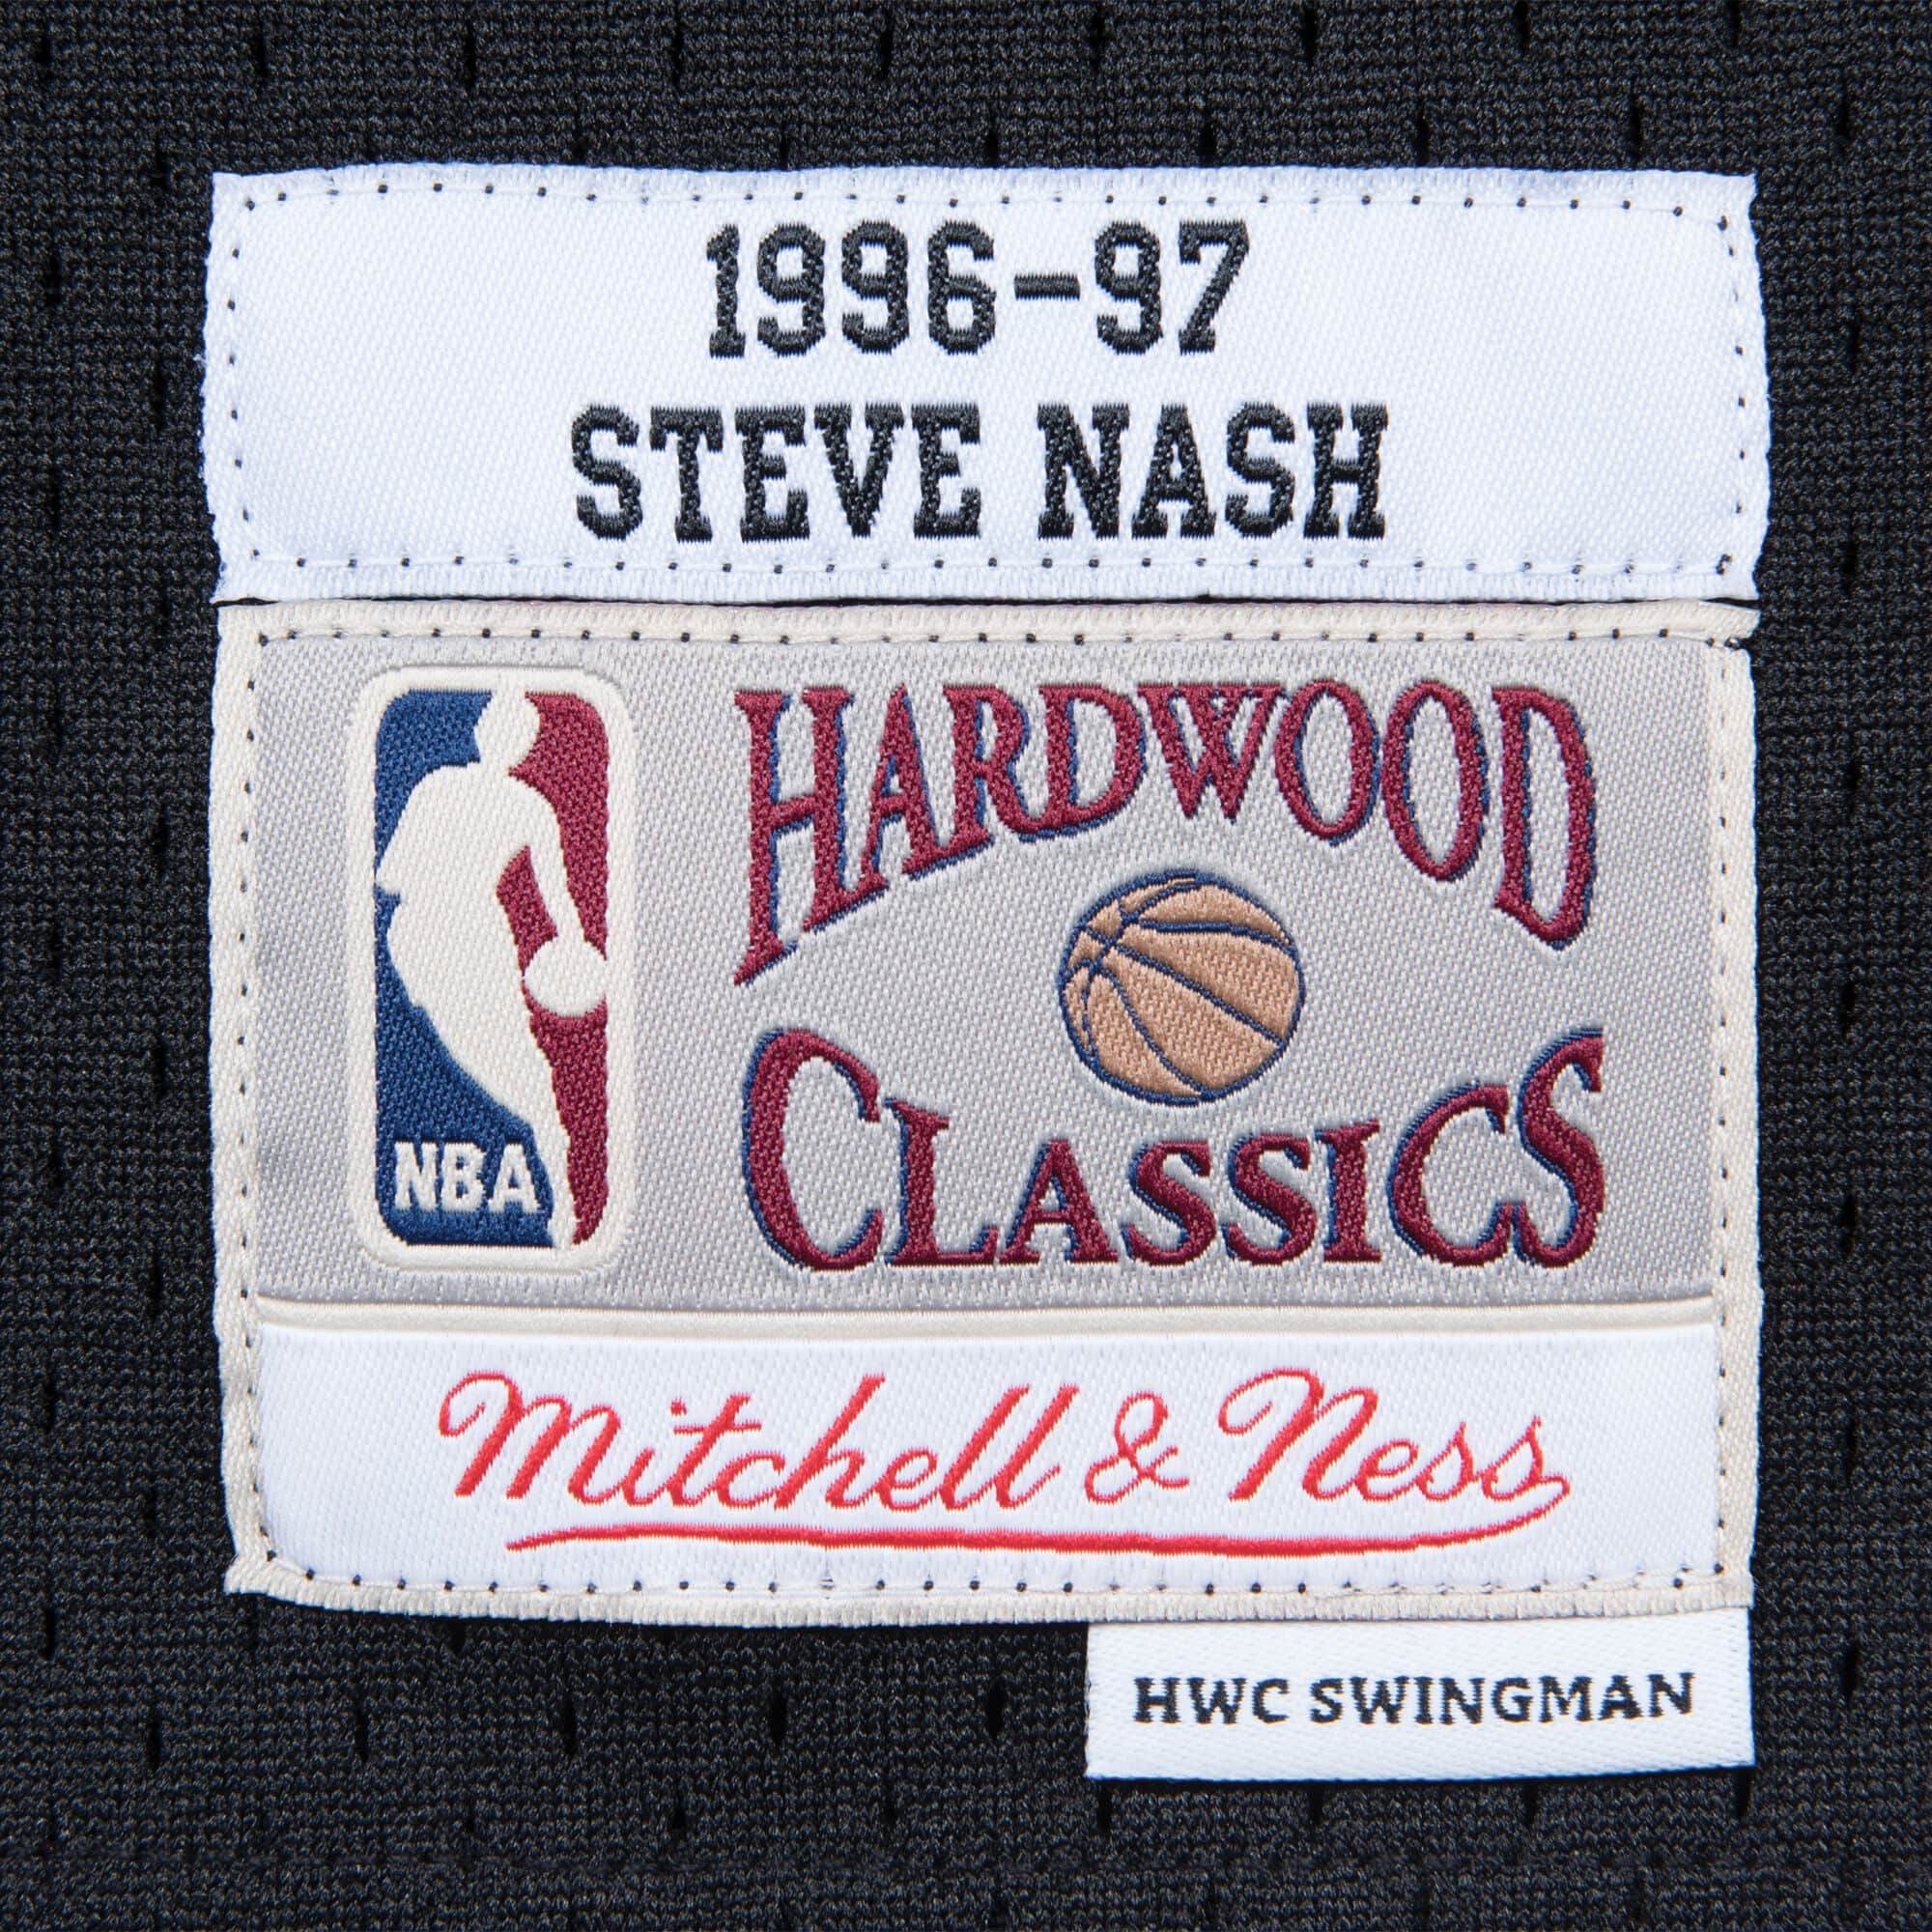 steve nash hardwood classic jersey